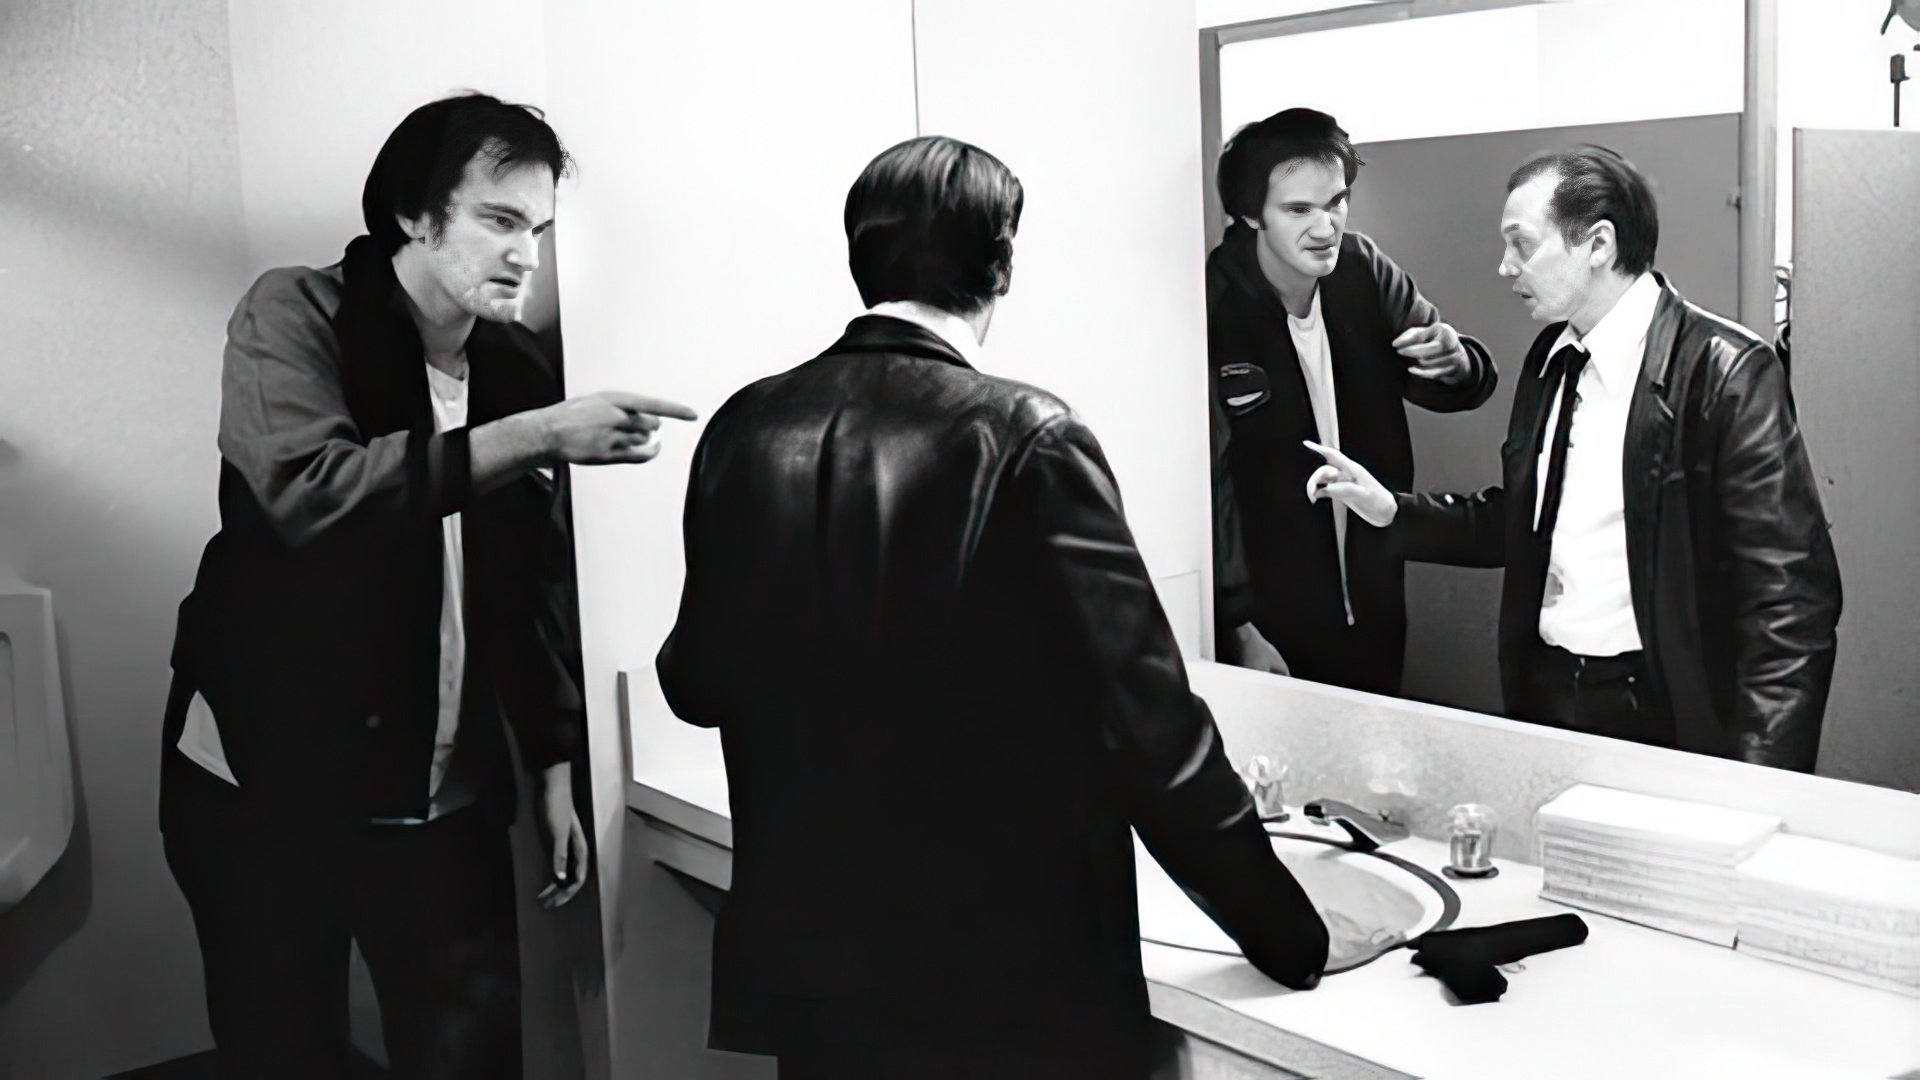 Steve Buscemi and Quentin Tarantino